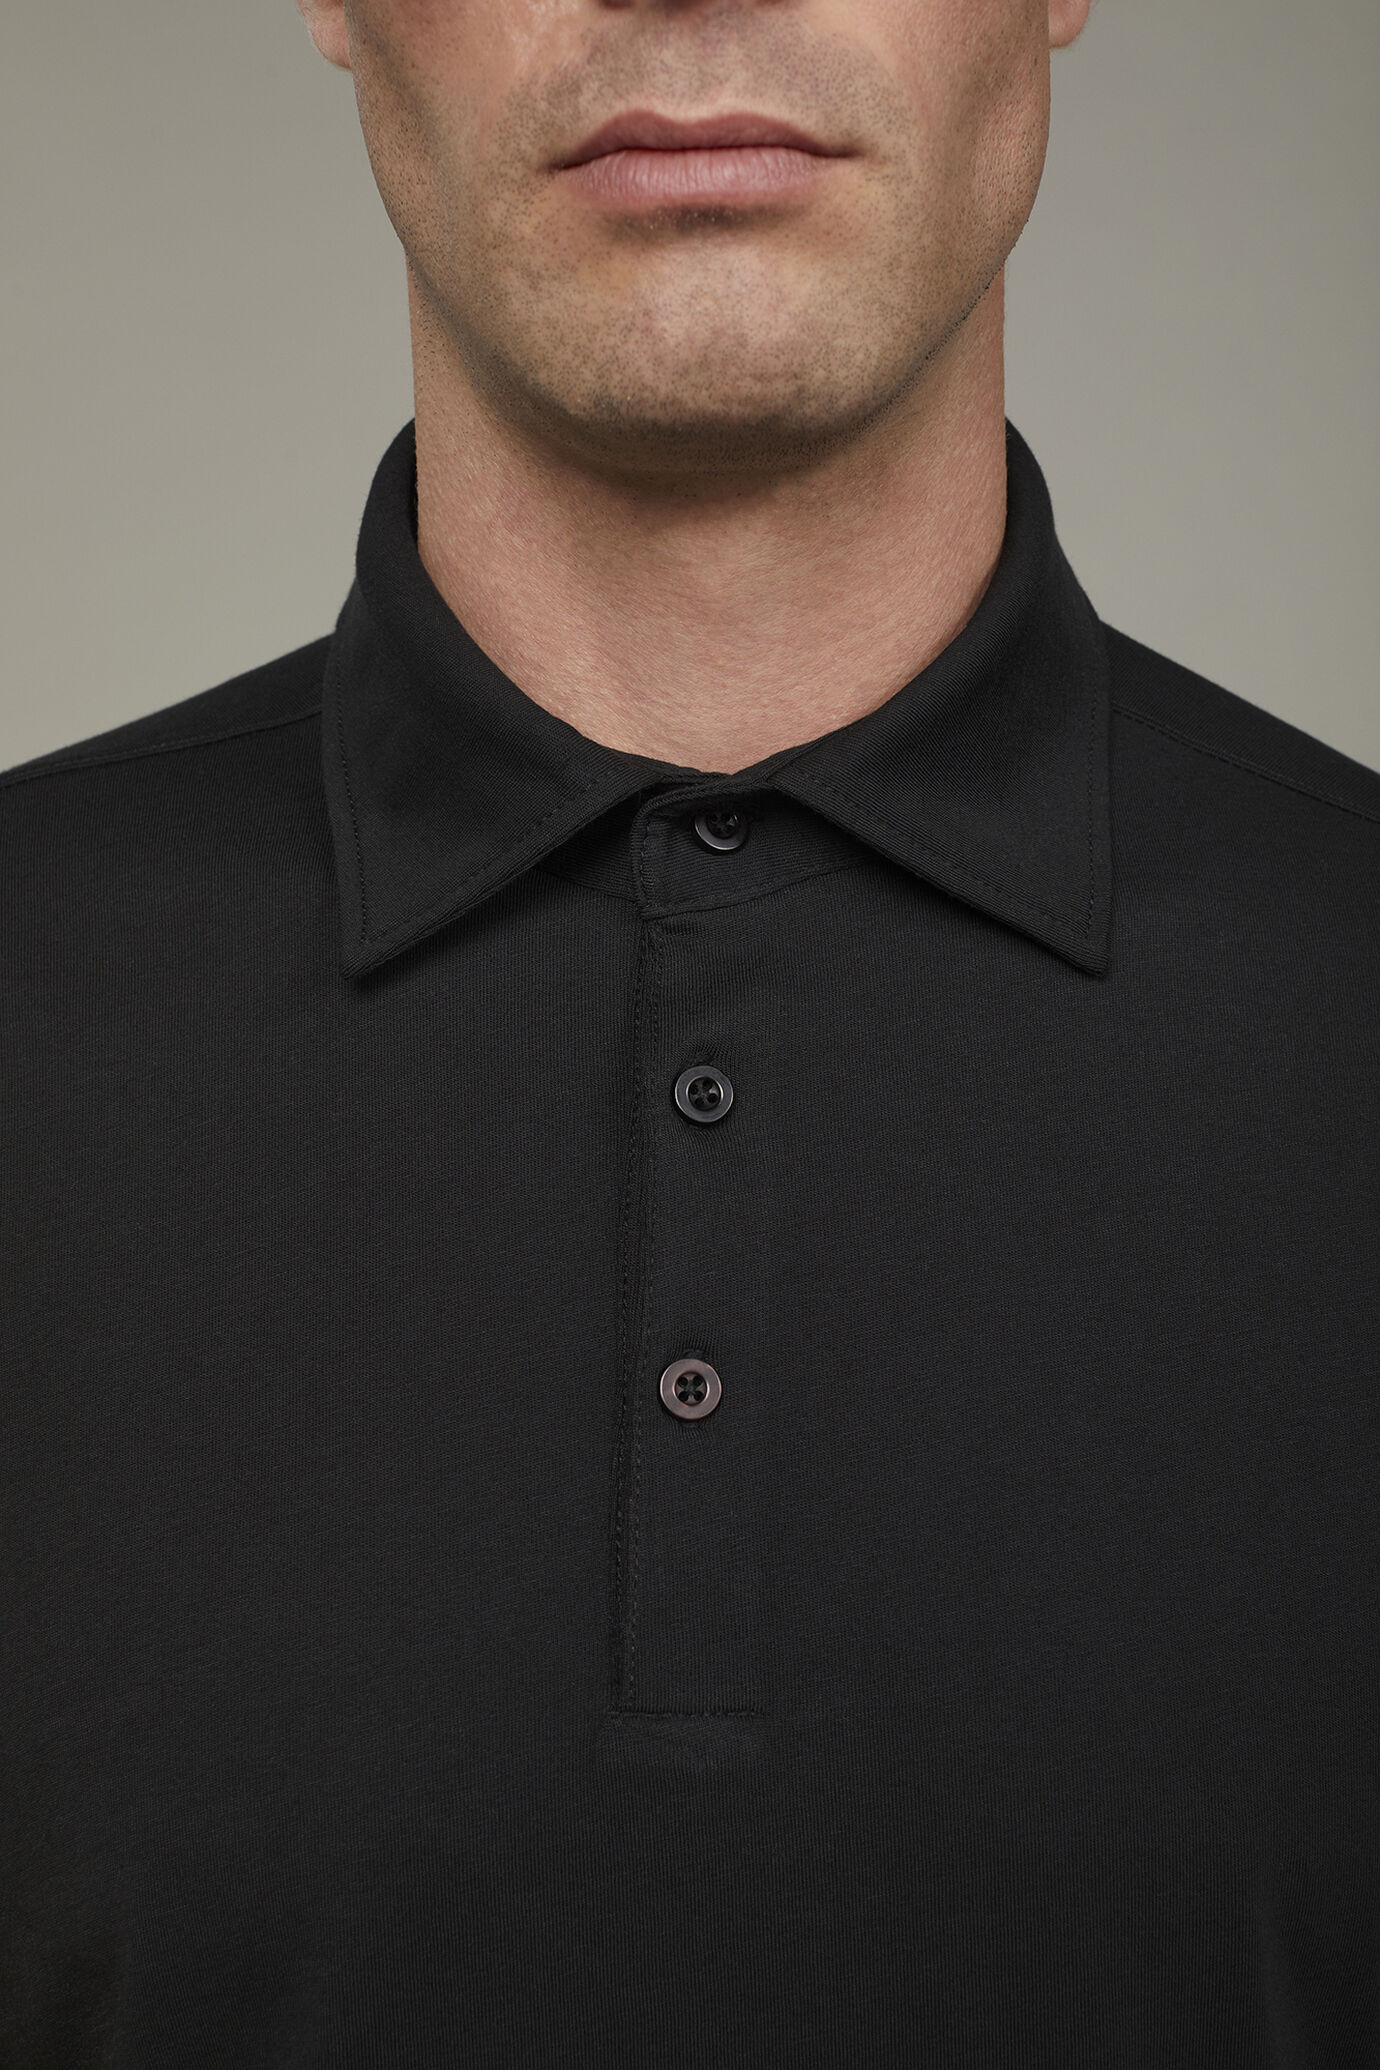 Men’s polo shirt short sleeves 100% supima cotton regular fit image number 3